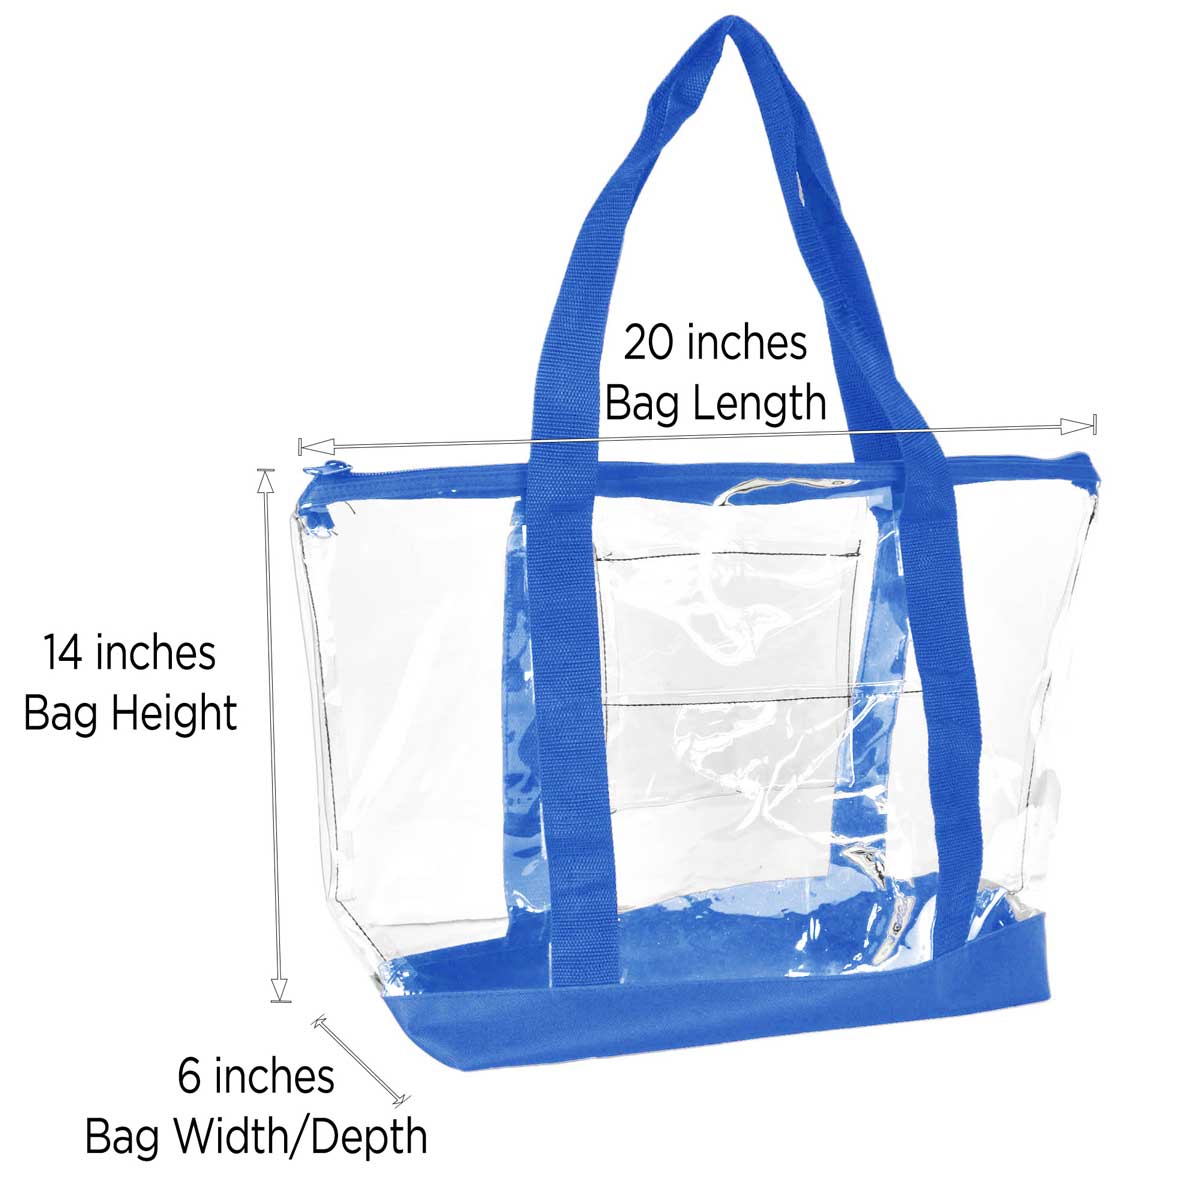 Dalix Clear Shopping Bag Security Work Tote Shoulder Bag Womens Handbag in Black Trim